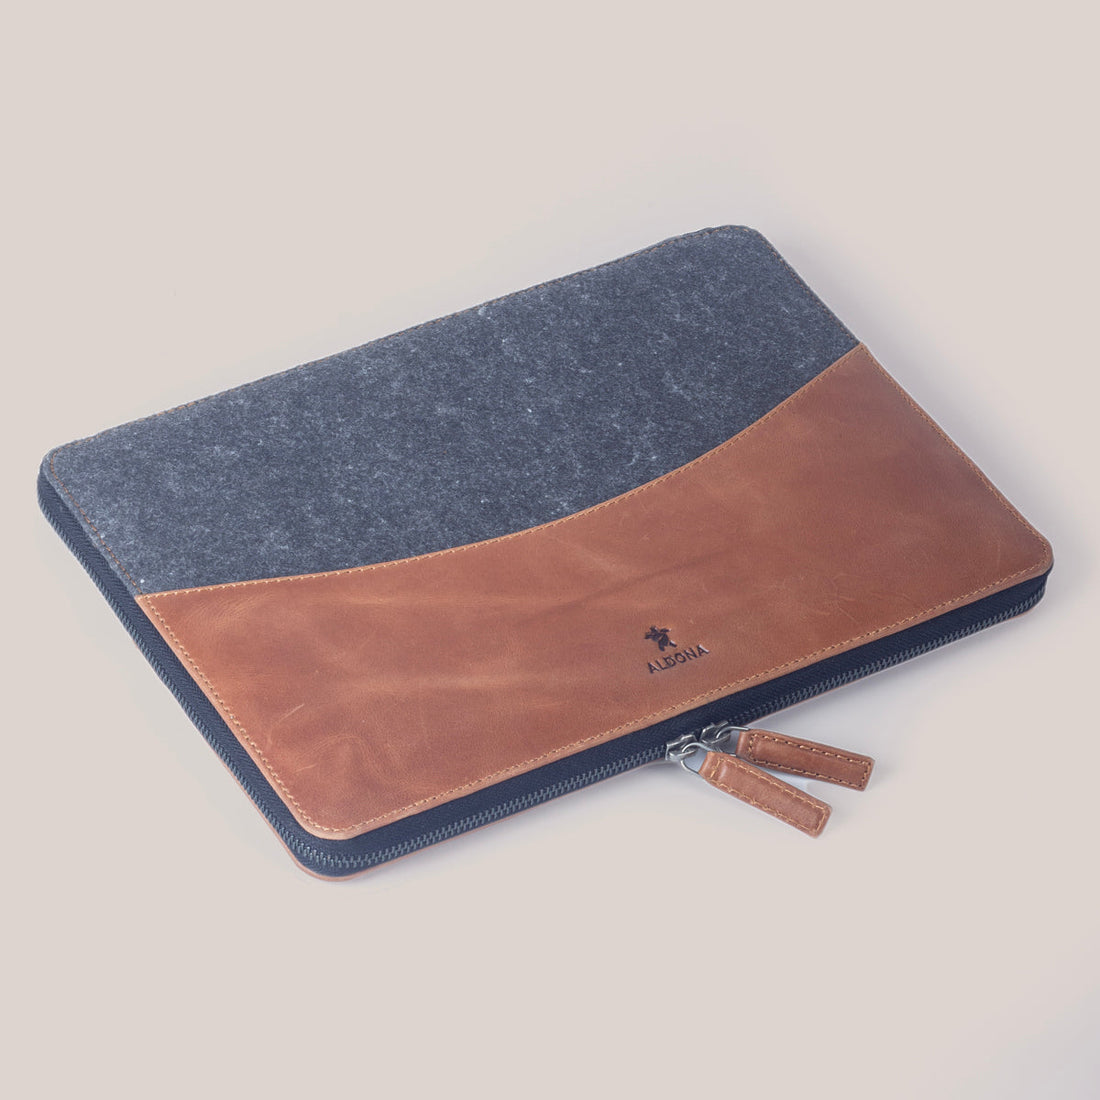 Microsoft Surface Book 15 Zippered Laptop Case - Vintage Tan